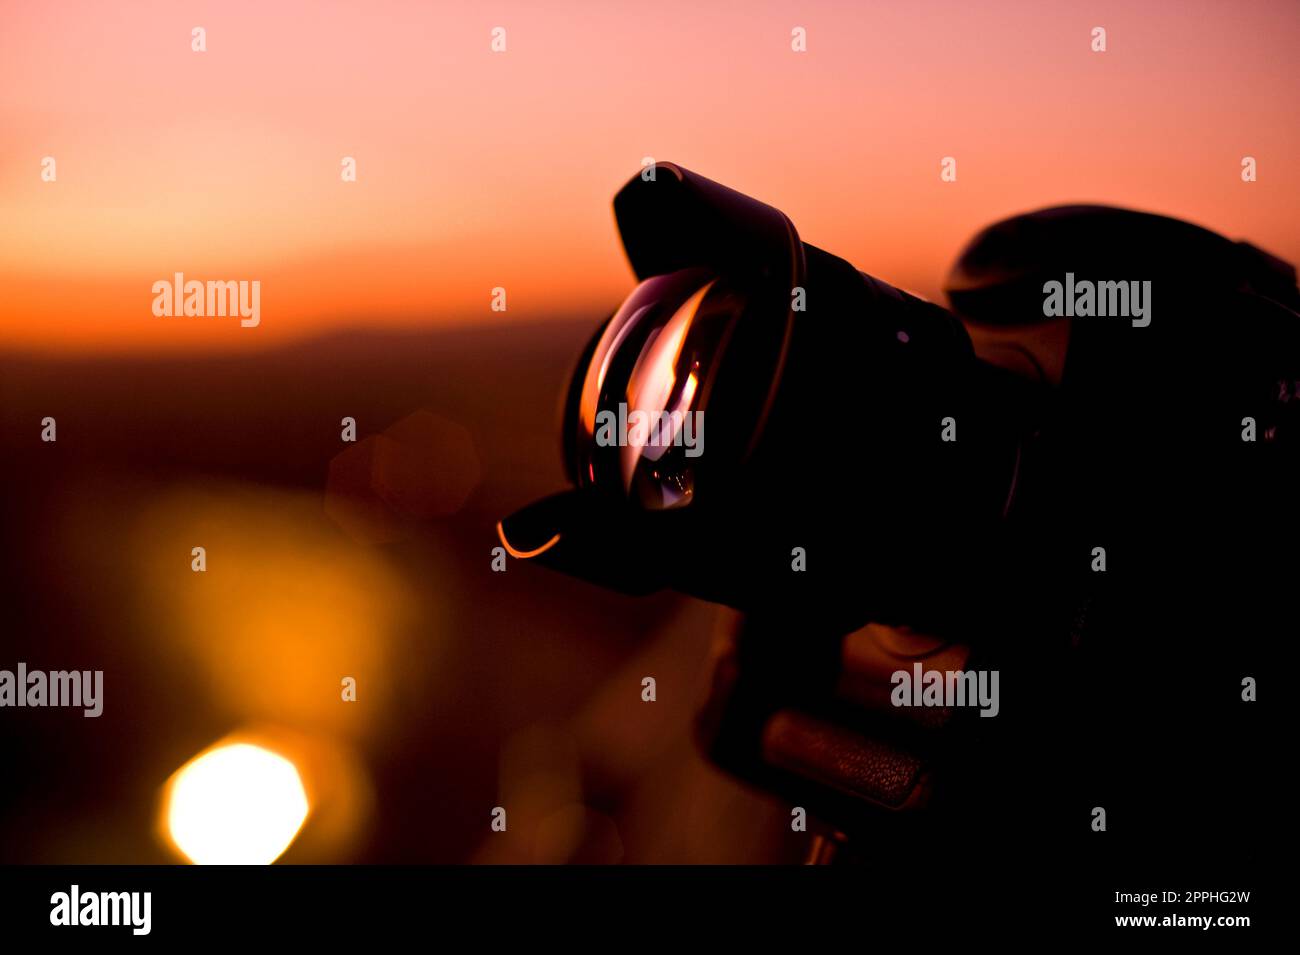 Nikon DSLR with 14mm lens capturing a sunset. Stock Photo